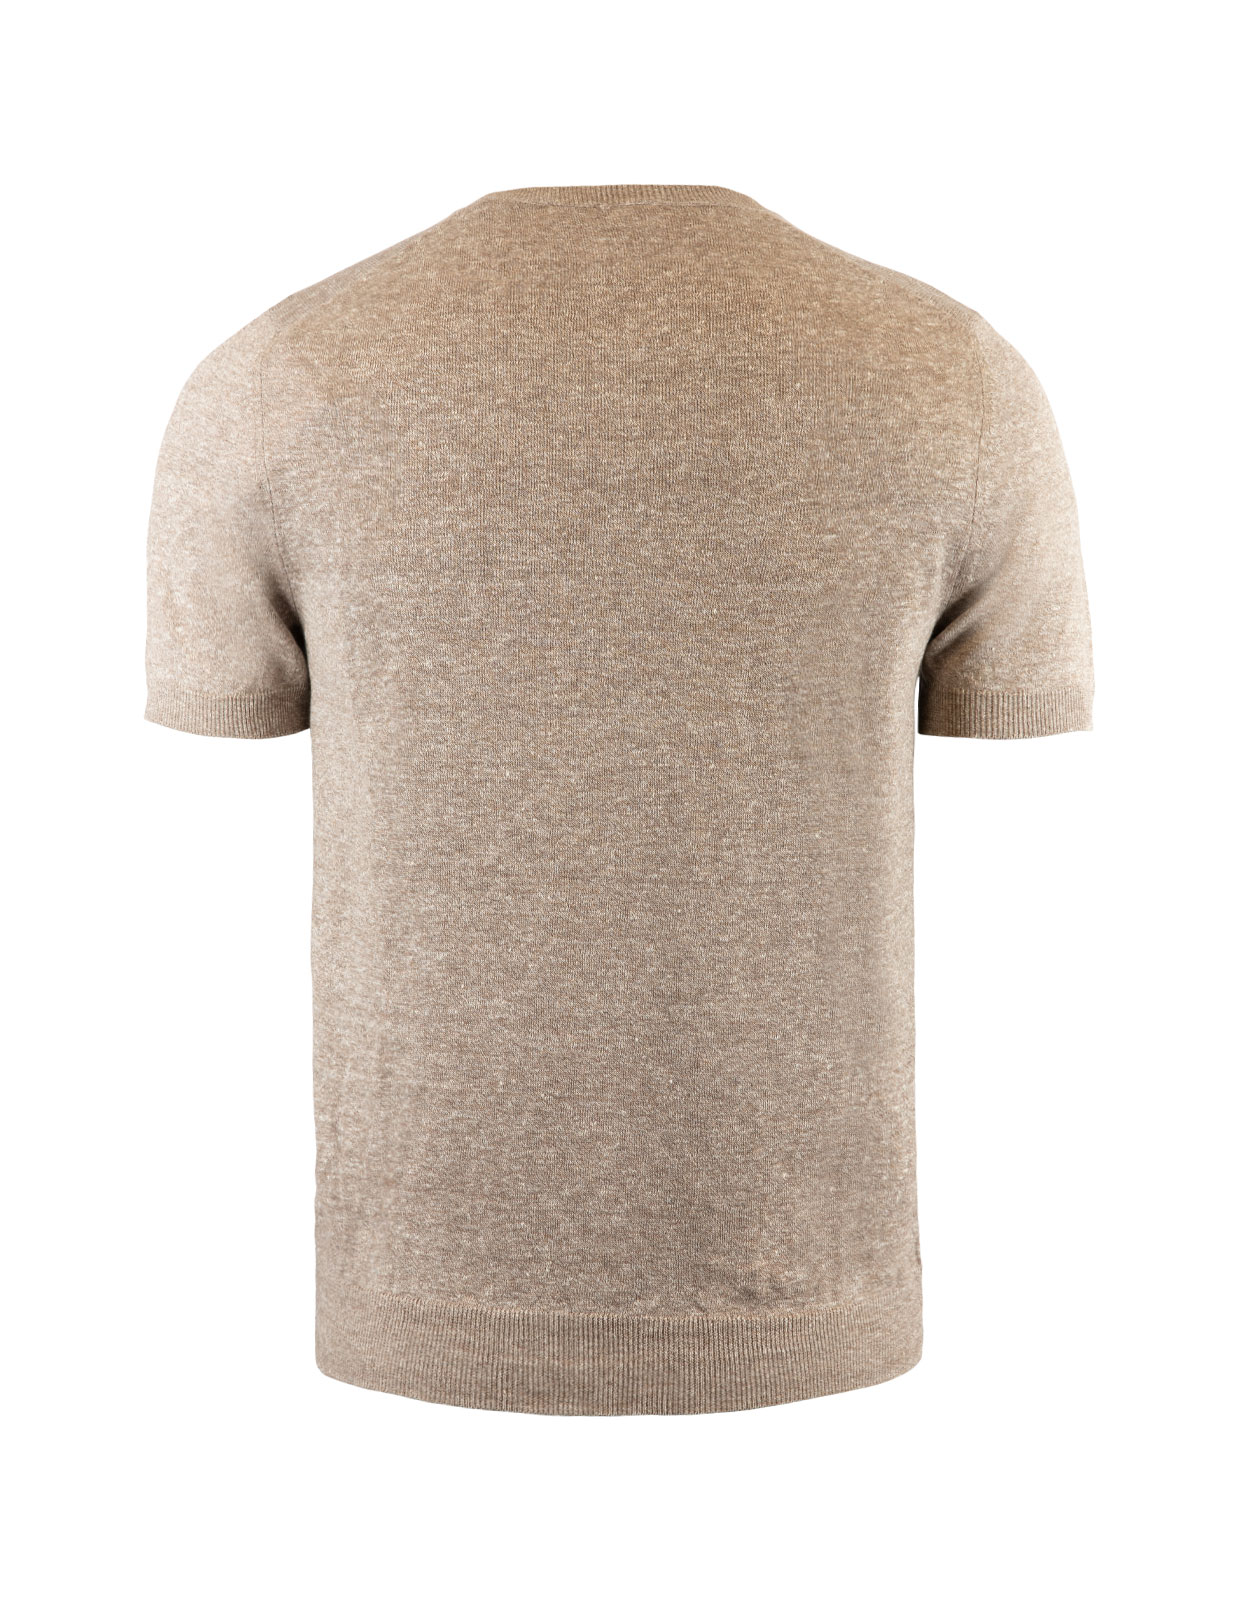 Luxury T-shirt Linen Cotton Sand Stl 56